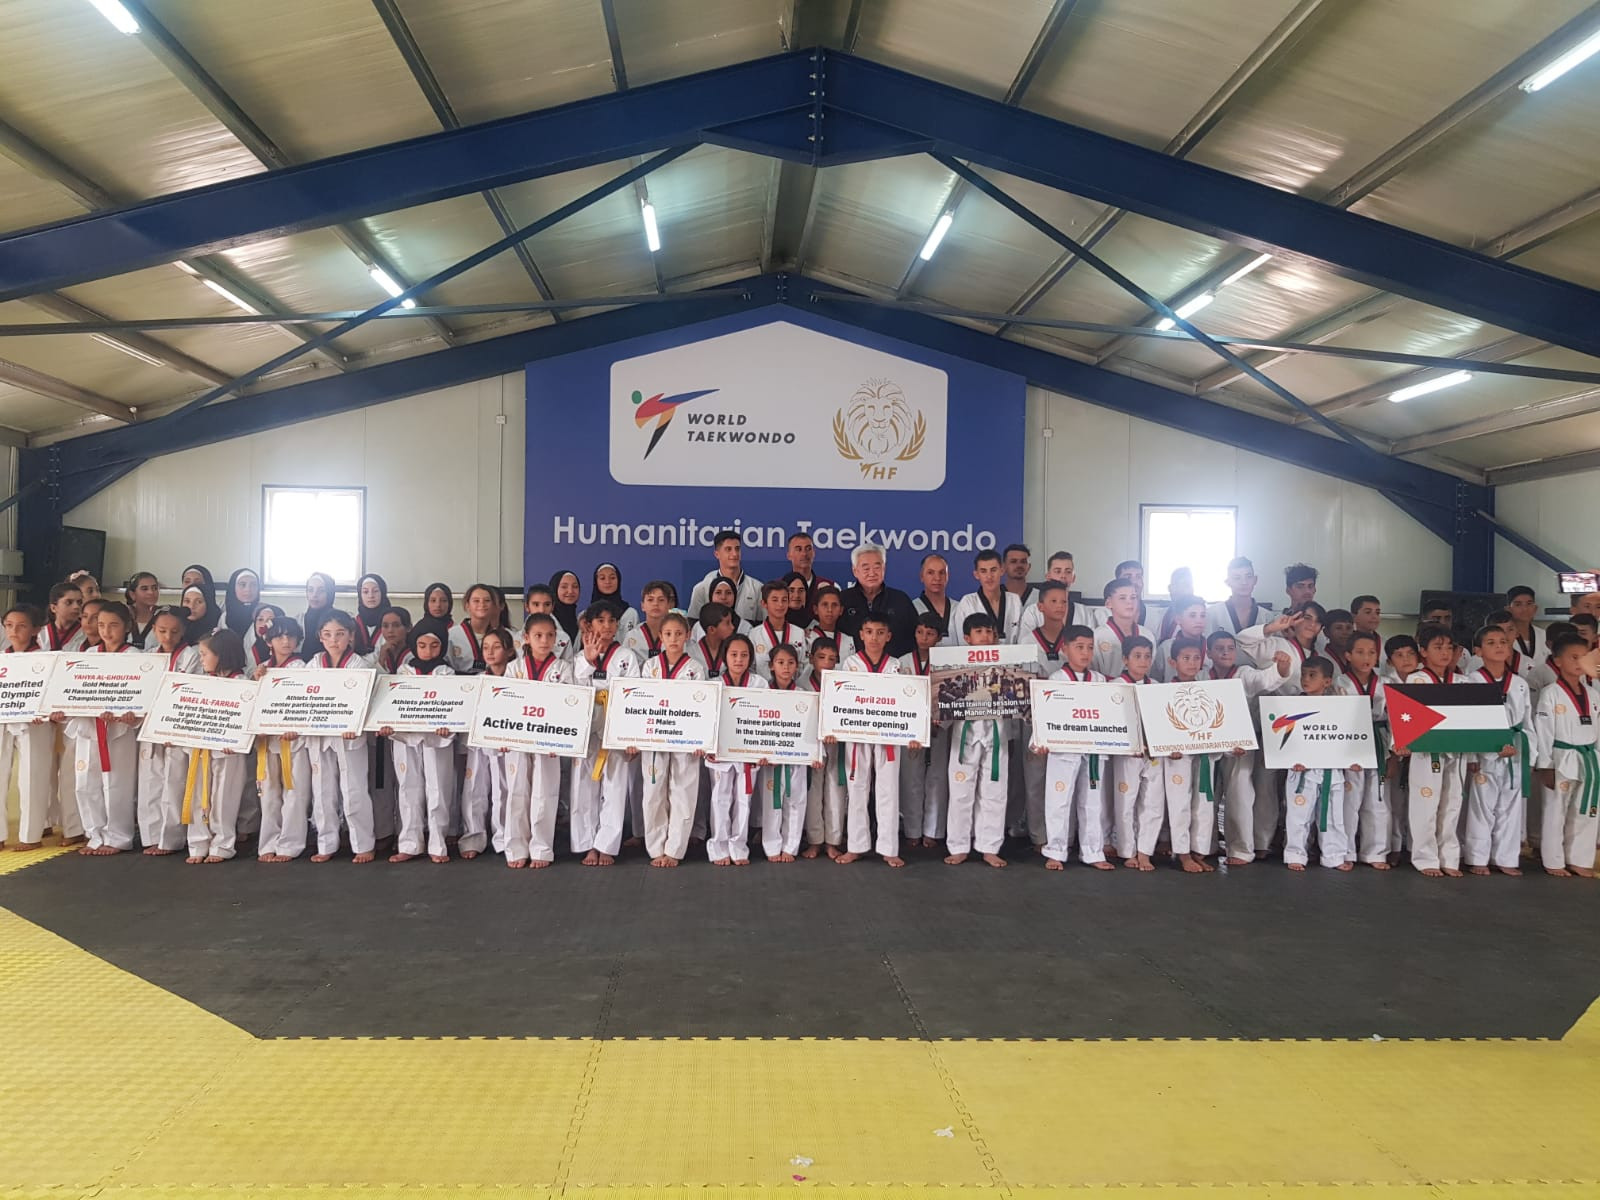 Chungwon Choue also paid a visit to the Taekwondo Humanitarian Foundation's flagship academy while in Jordan ©World Taekwondo